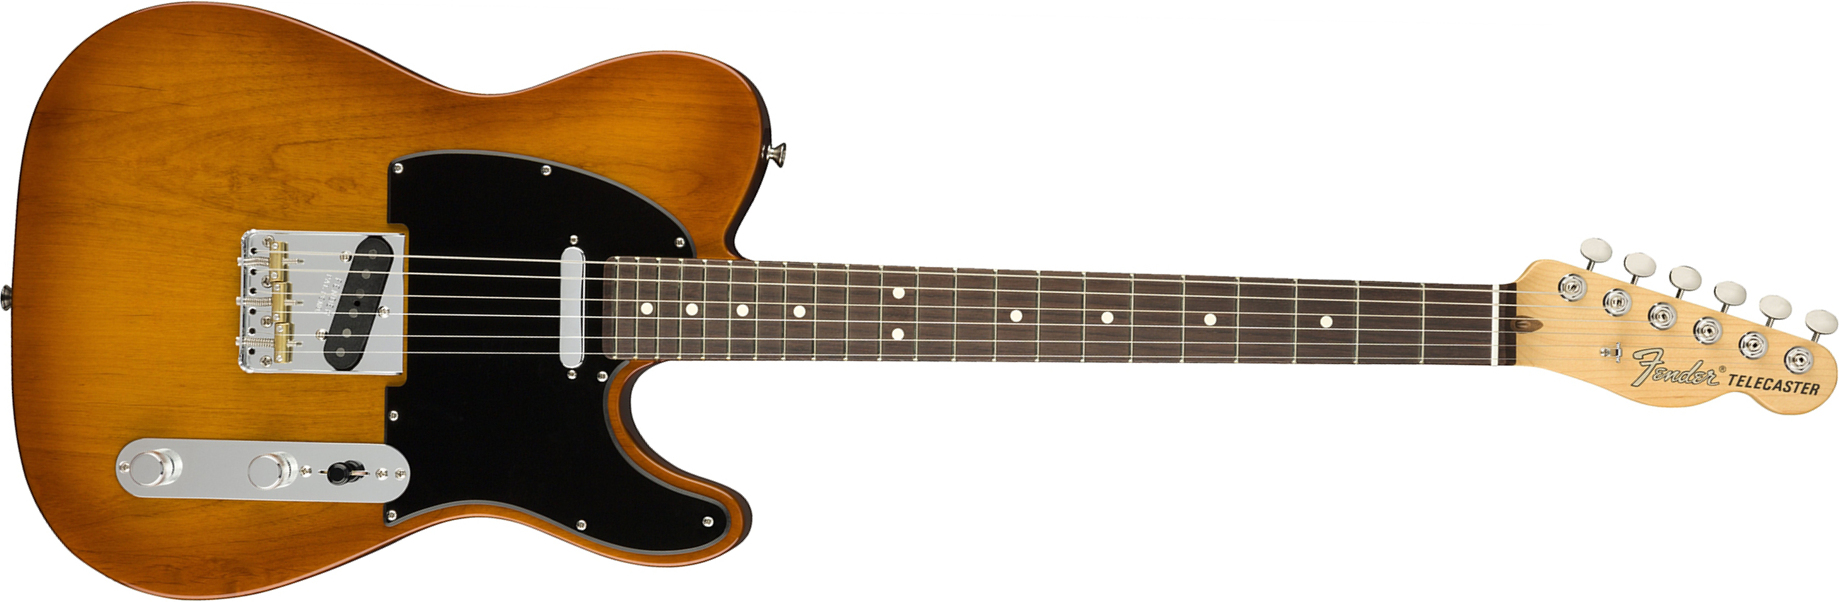 Fender Tele American Performer Usa Rw - Honey Burst - Guitarra eléctrica con forma de tel - Main picture